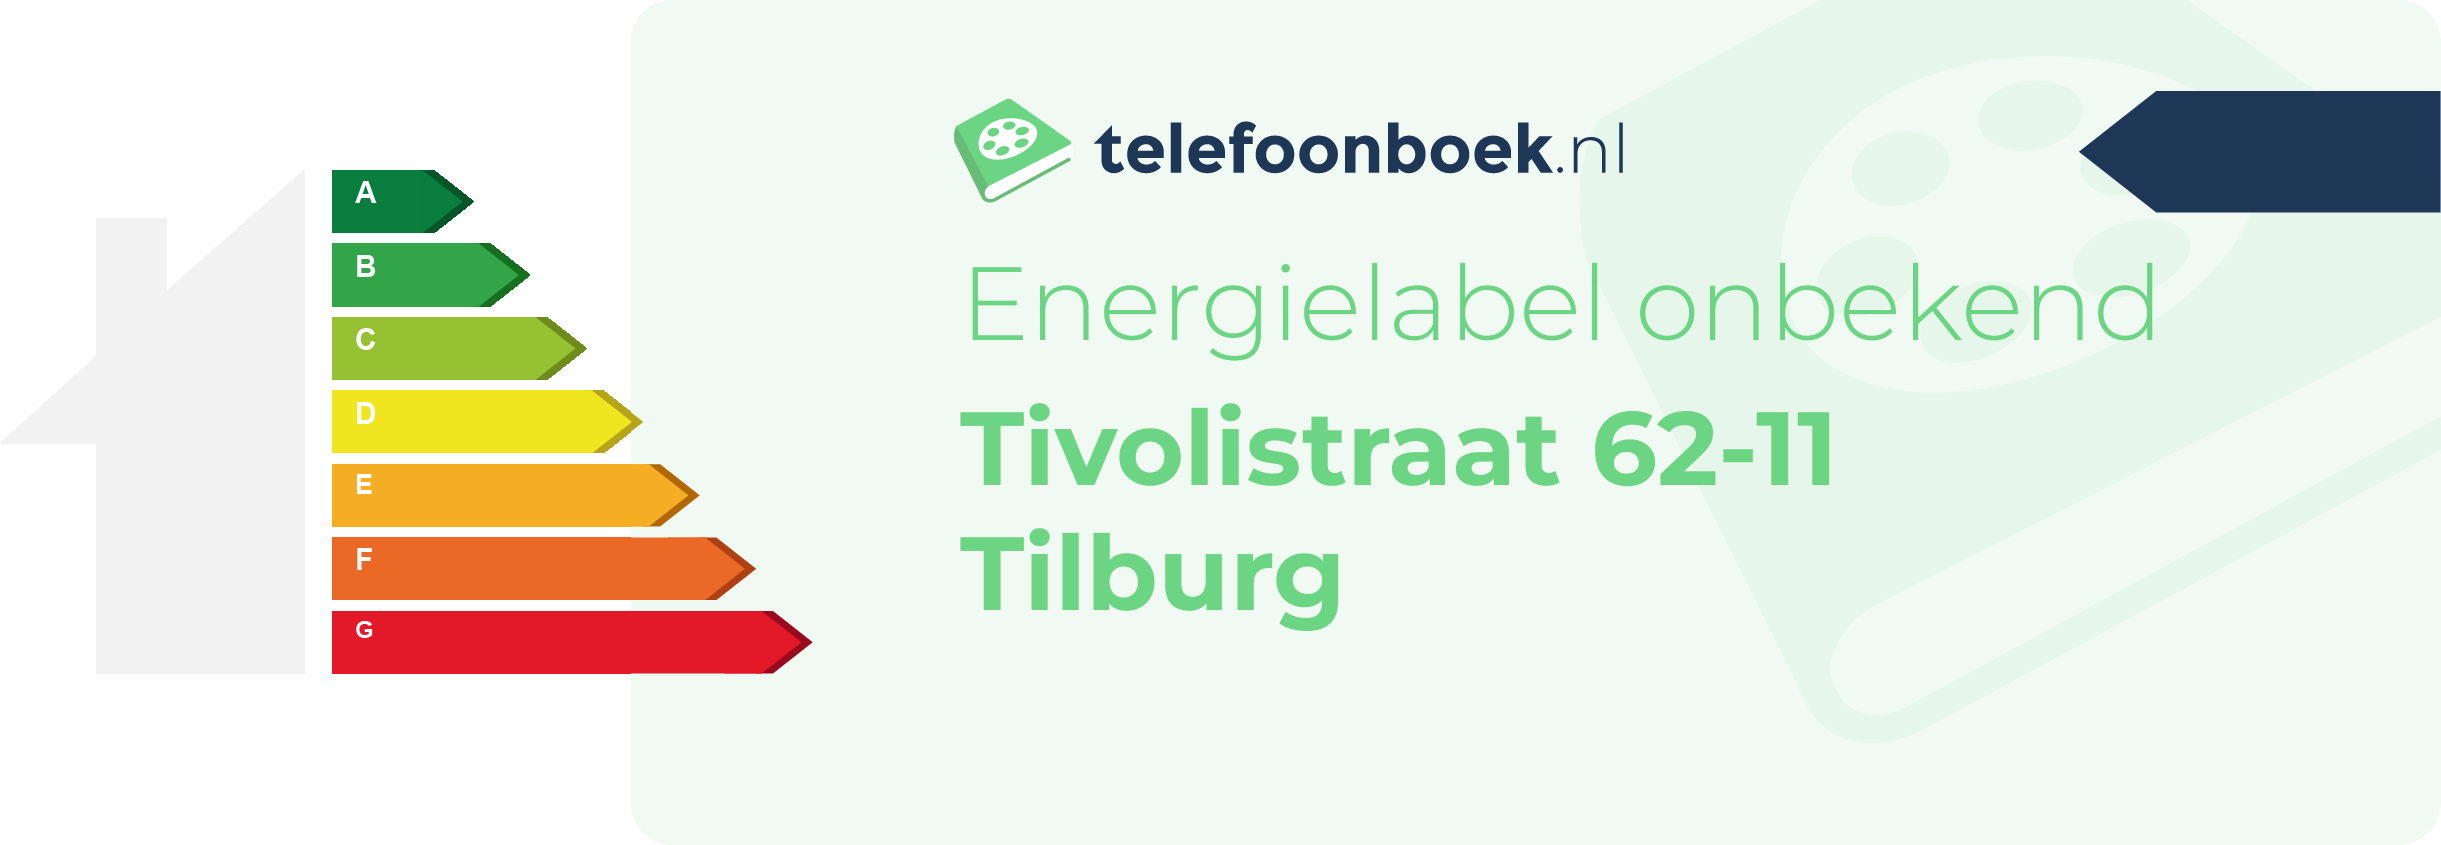 Energielabel Tivolistraat 62-11 Tilburg